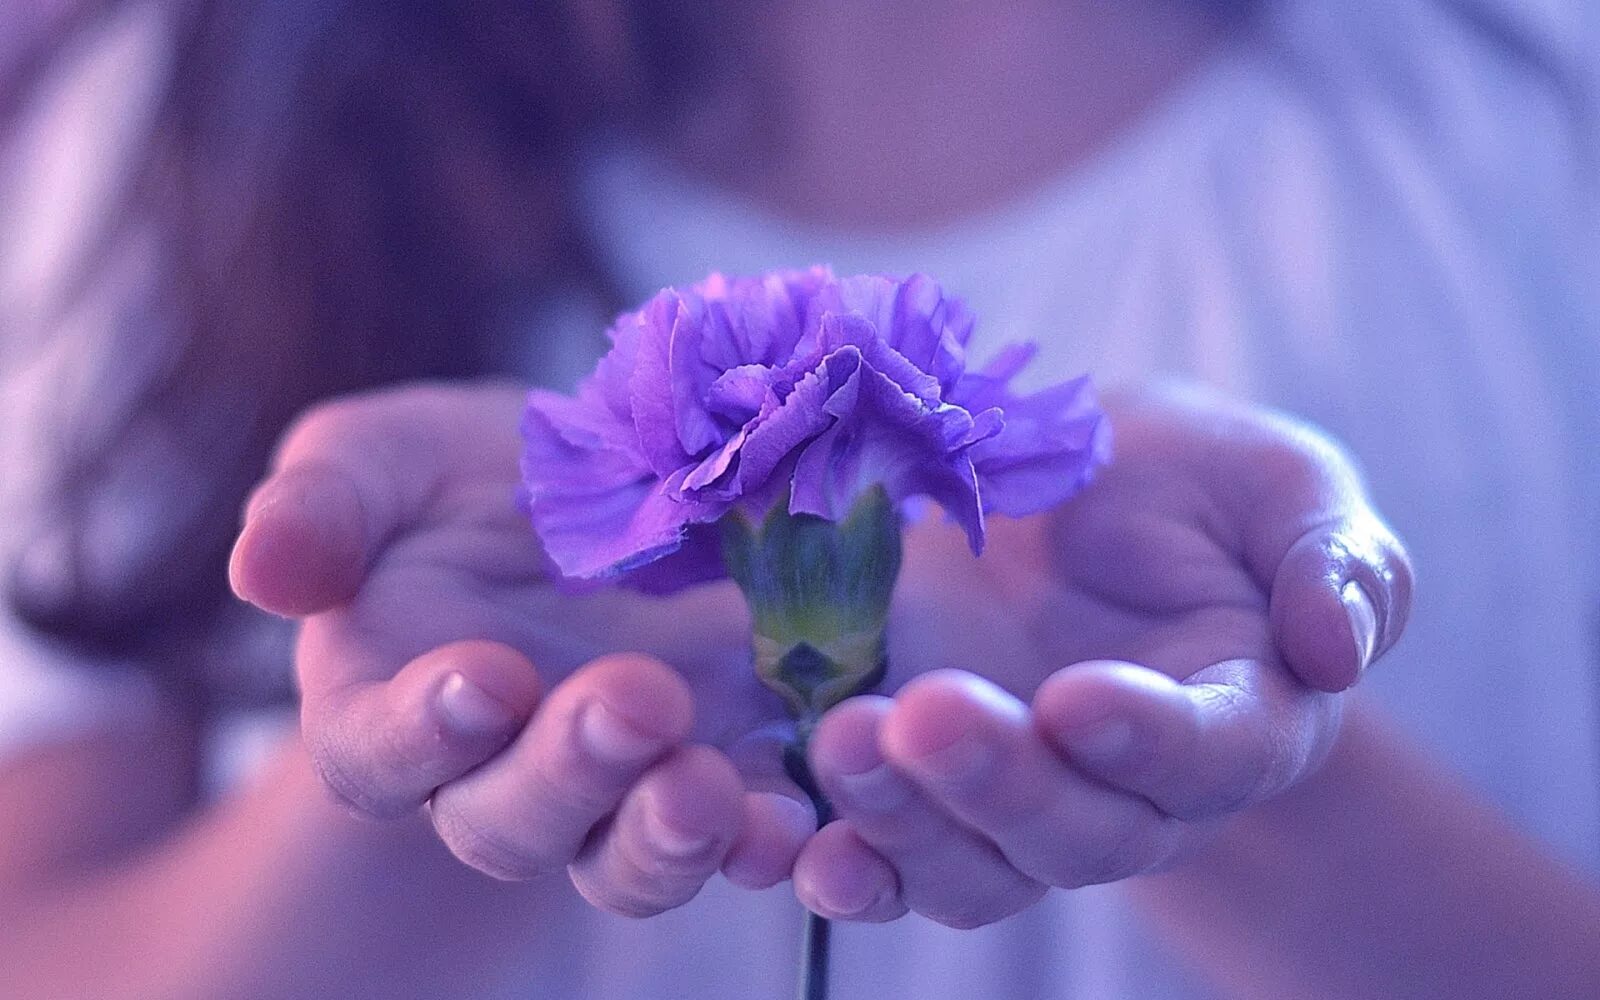 Цветок на руку.. Нежные цветы в руках. Цветы в ладонях. Трогательные цветы. Душевно отзывчивый